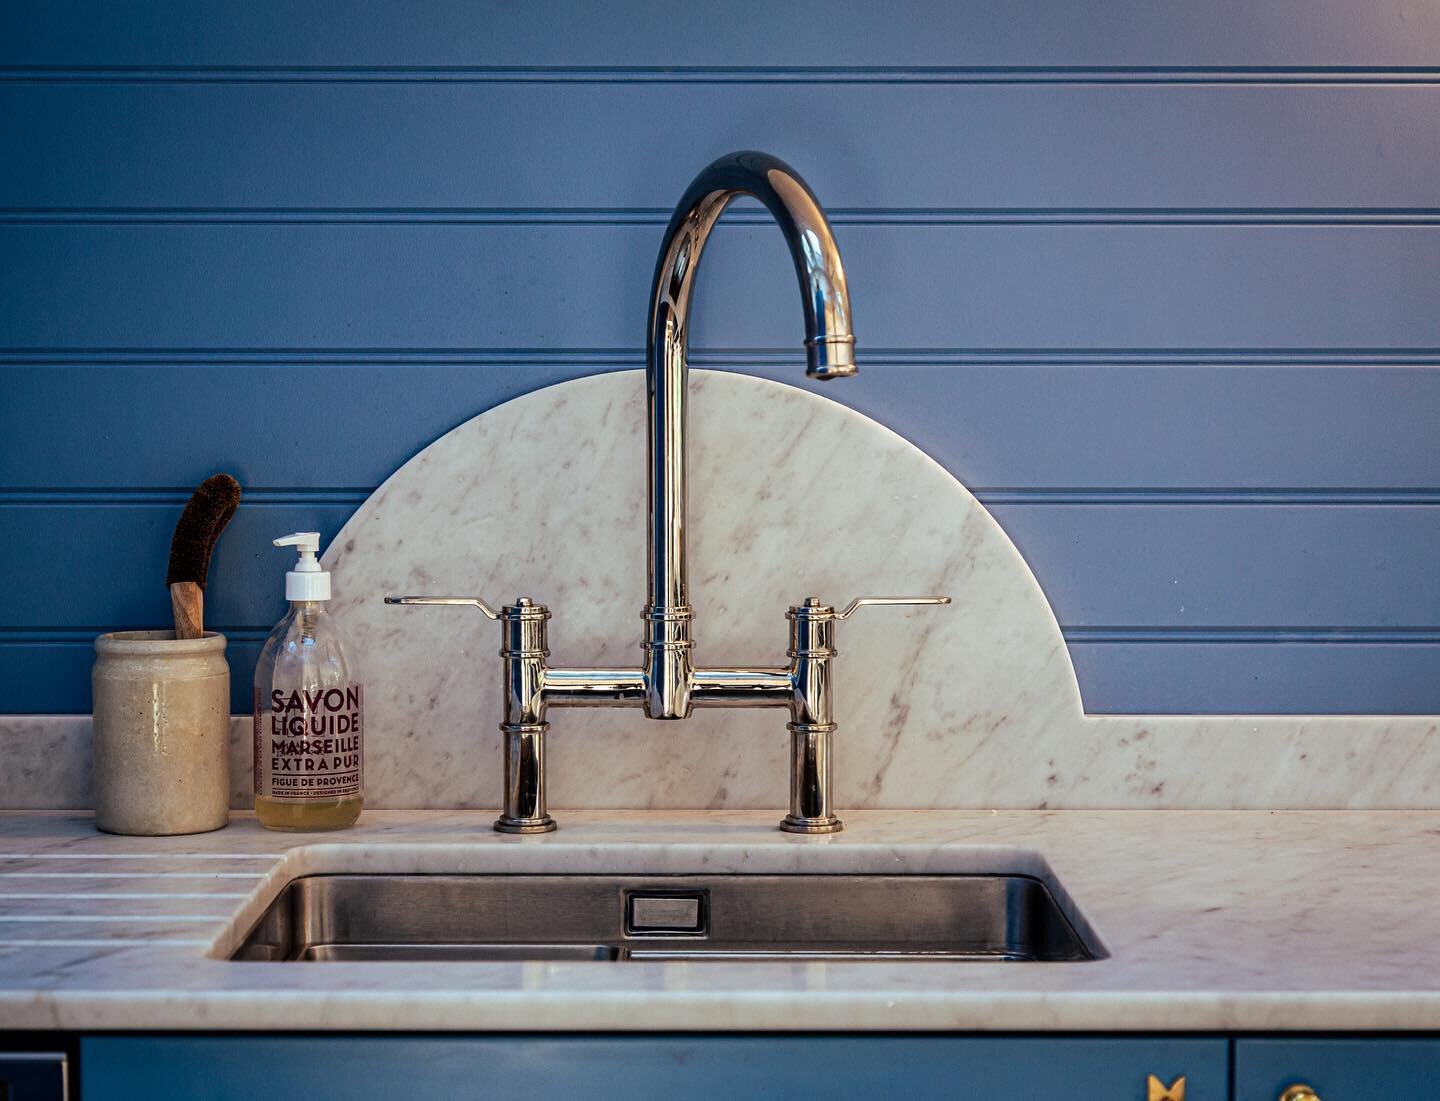 This Olaf kitchen sink is giving us beach house vibes ☀️

#kitchen #kitchendesign #kitcheninspo #interiordesign #home #homerenovation #londonhome #sink #kitchenrenovation